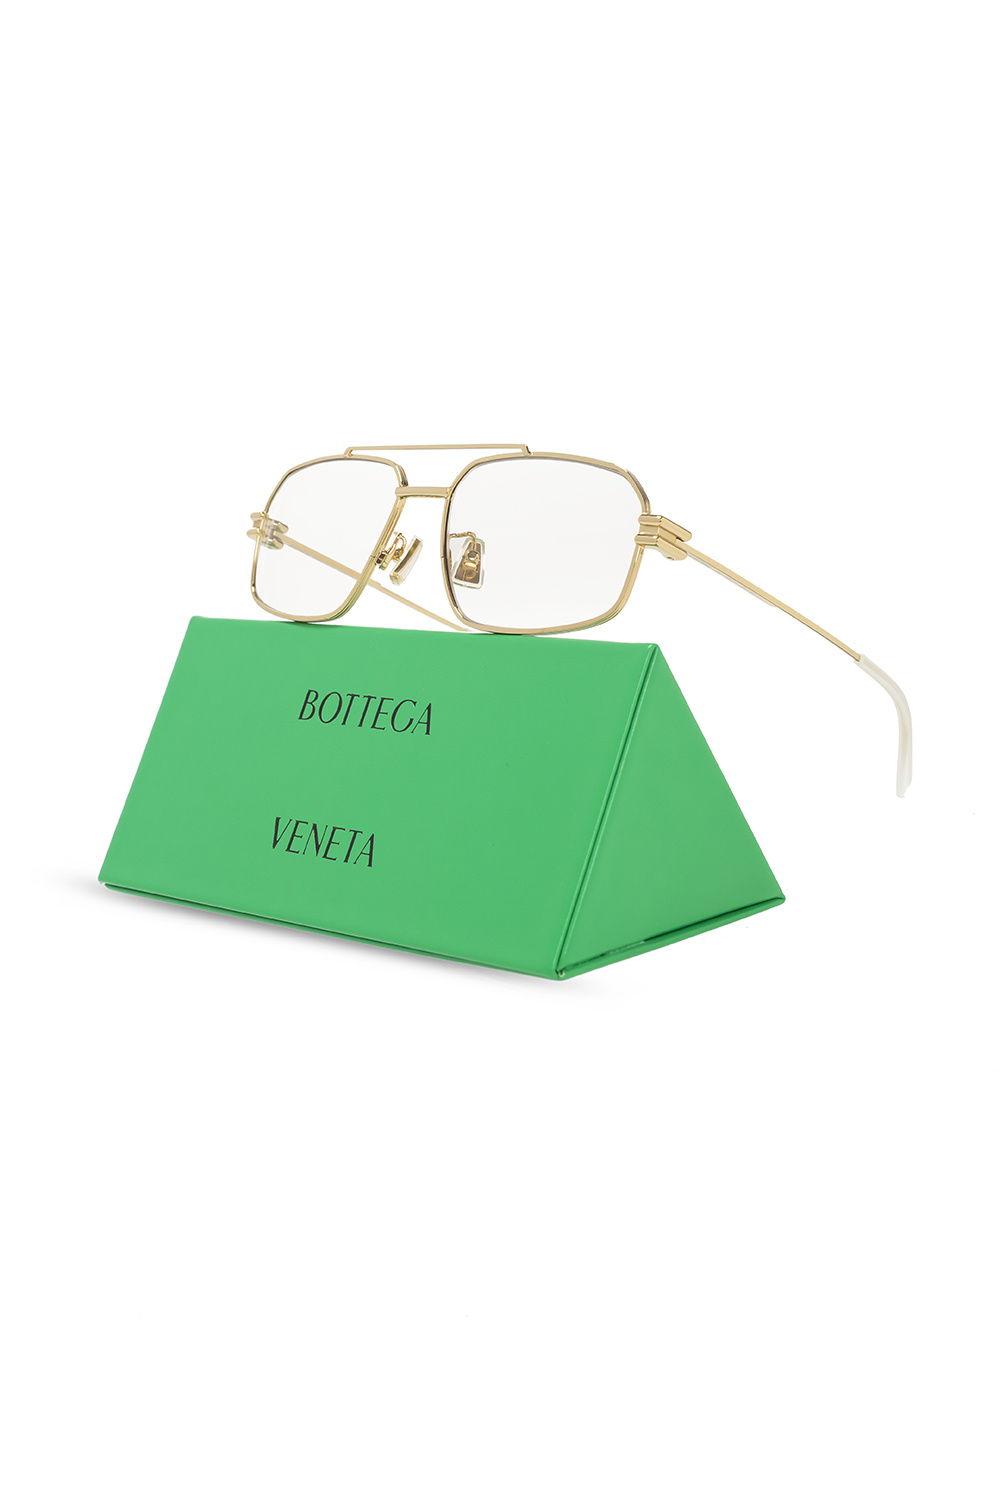 Bottega Veneta balenciaga eyewear rectangular frame sunglasses item